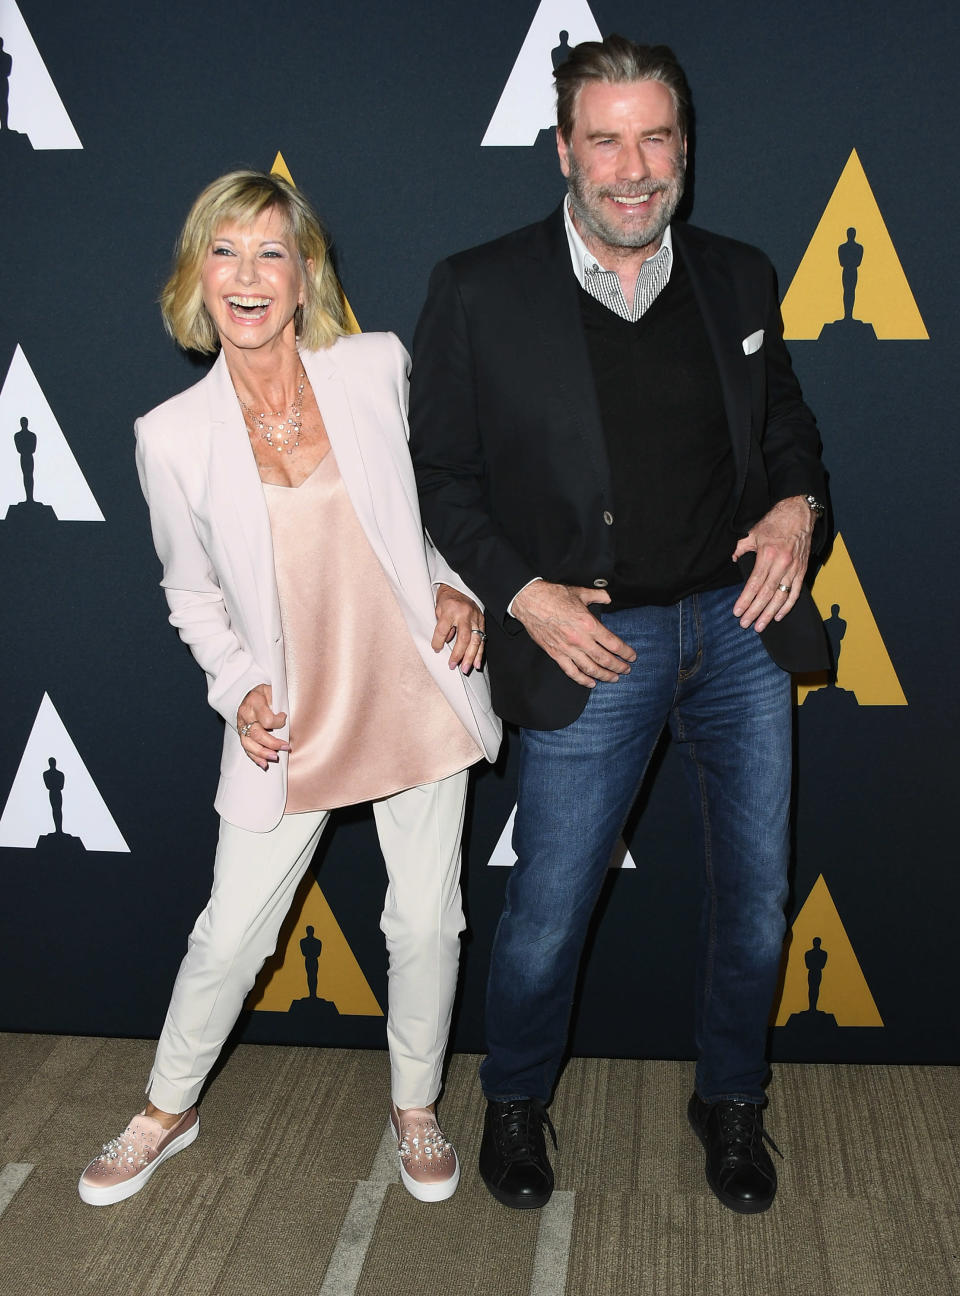 BEVERLY HILLS, CA – AUGUST 15: Olivia Newton-John and John Travolta attend The Academy Presents 40th Anniversary 'Grease' at Samuel Goldwyn Theater in 2018 - Credit: Jon Kopaloff/FilmMagic